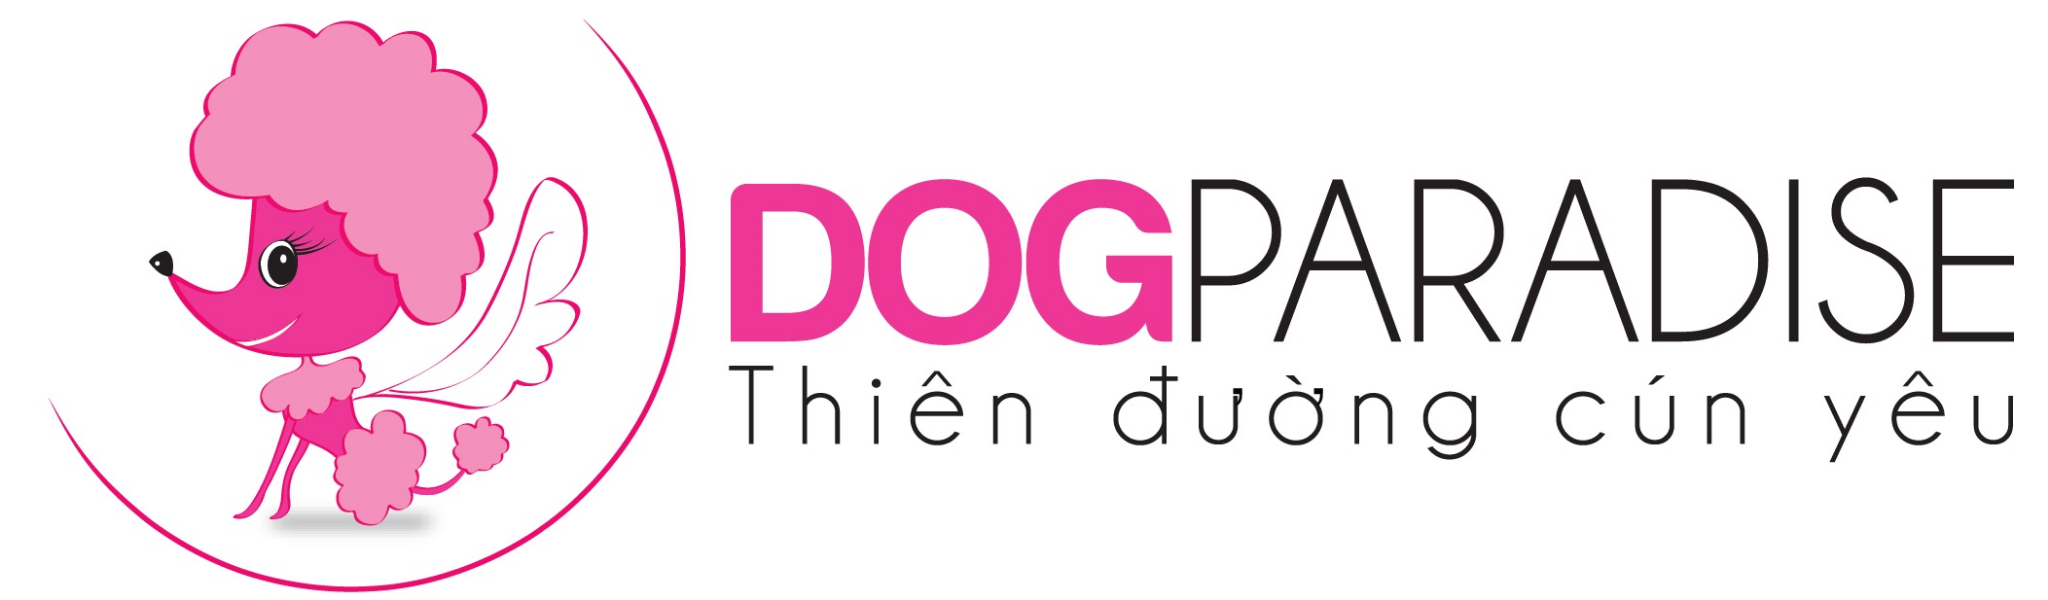 DogParadise - Shop thú cưng - Pet shop số 1 TPHCM